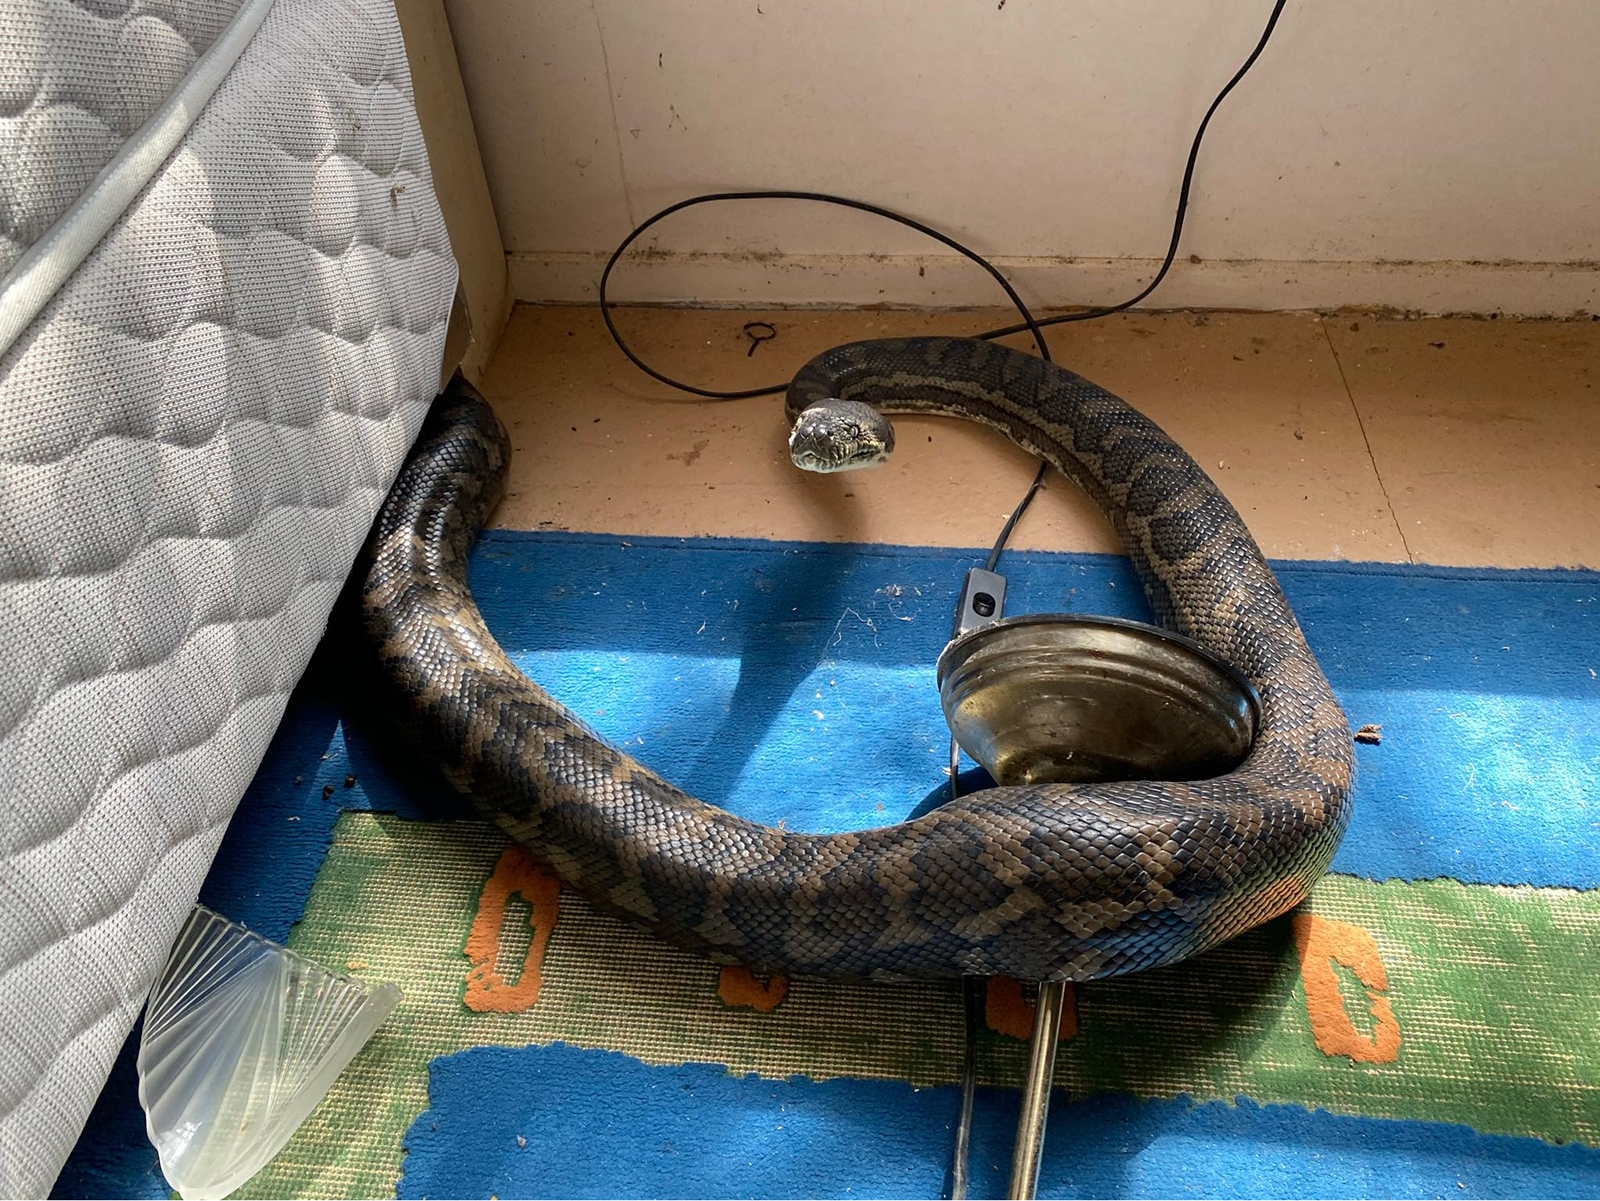 4-foot snake found in toilet of Australian home